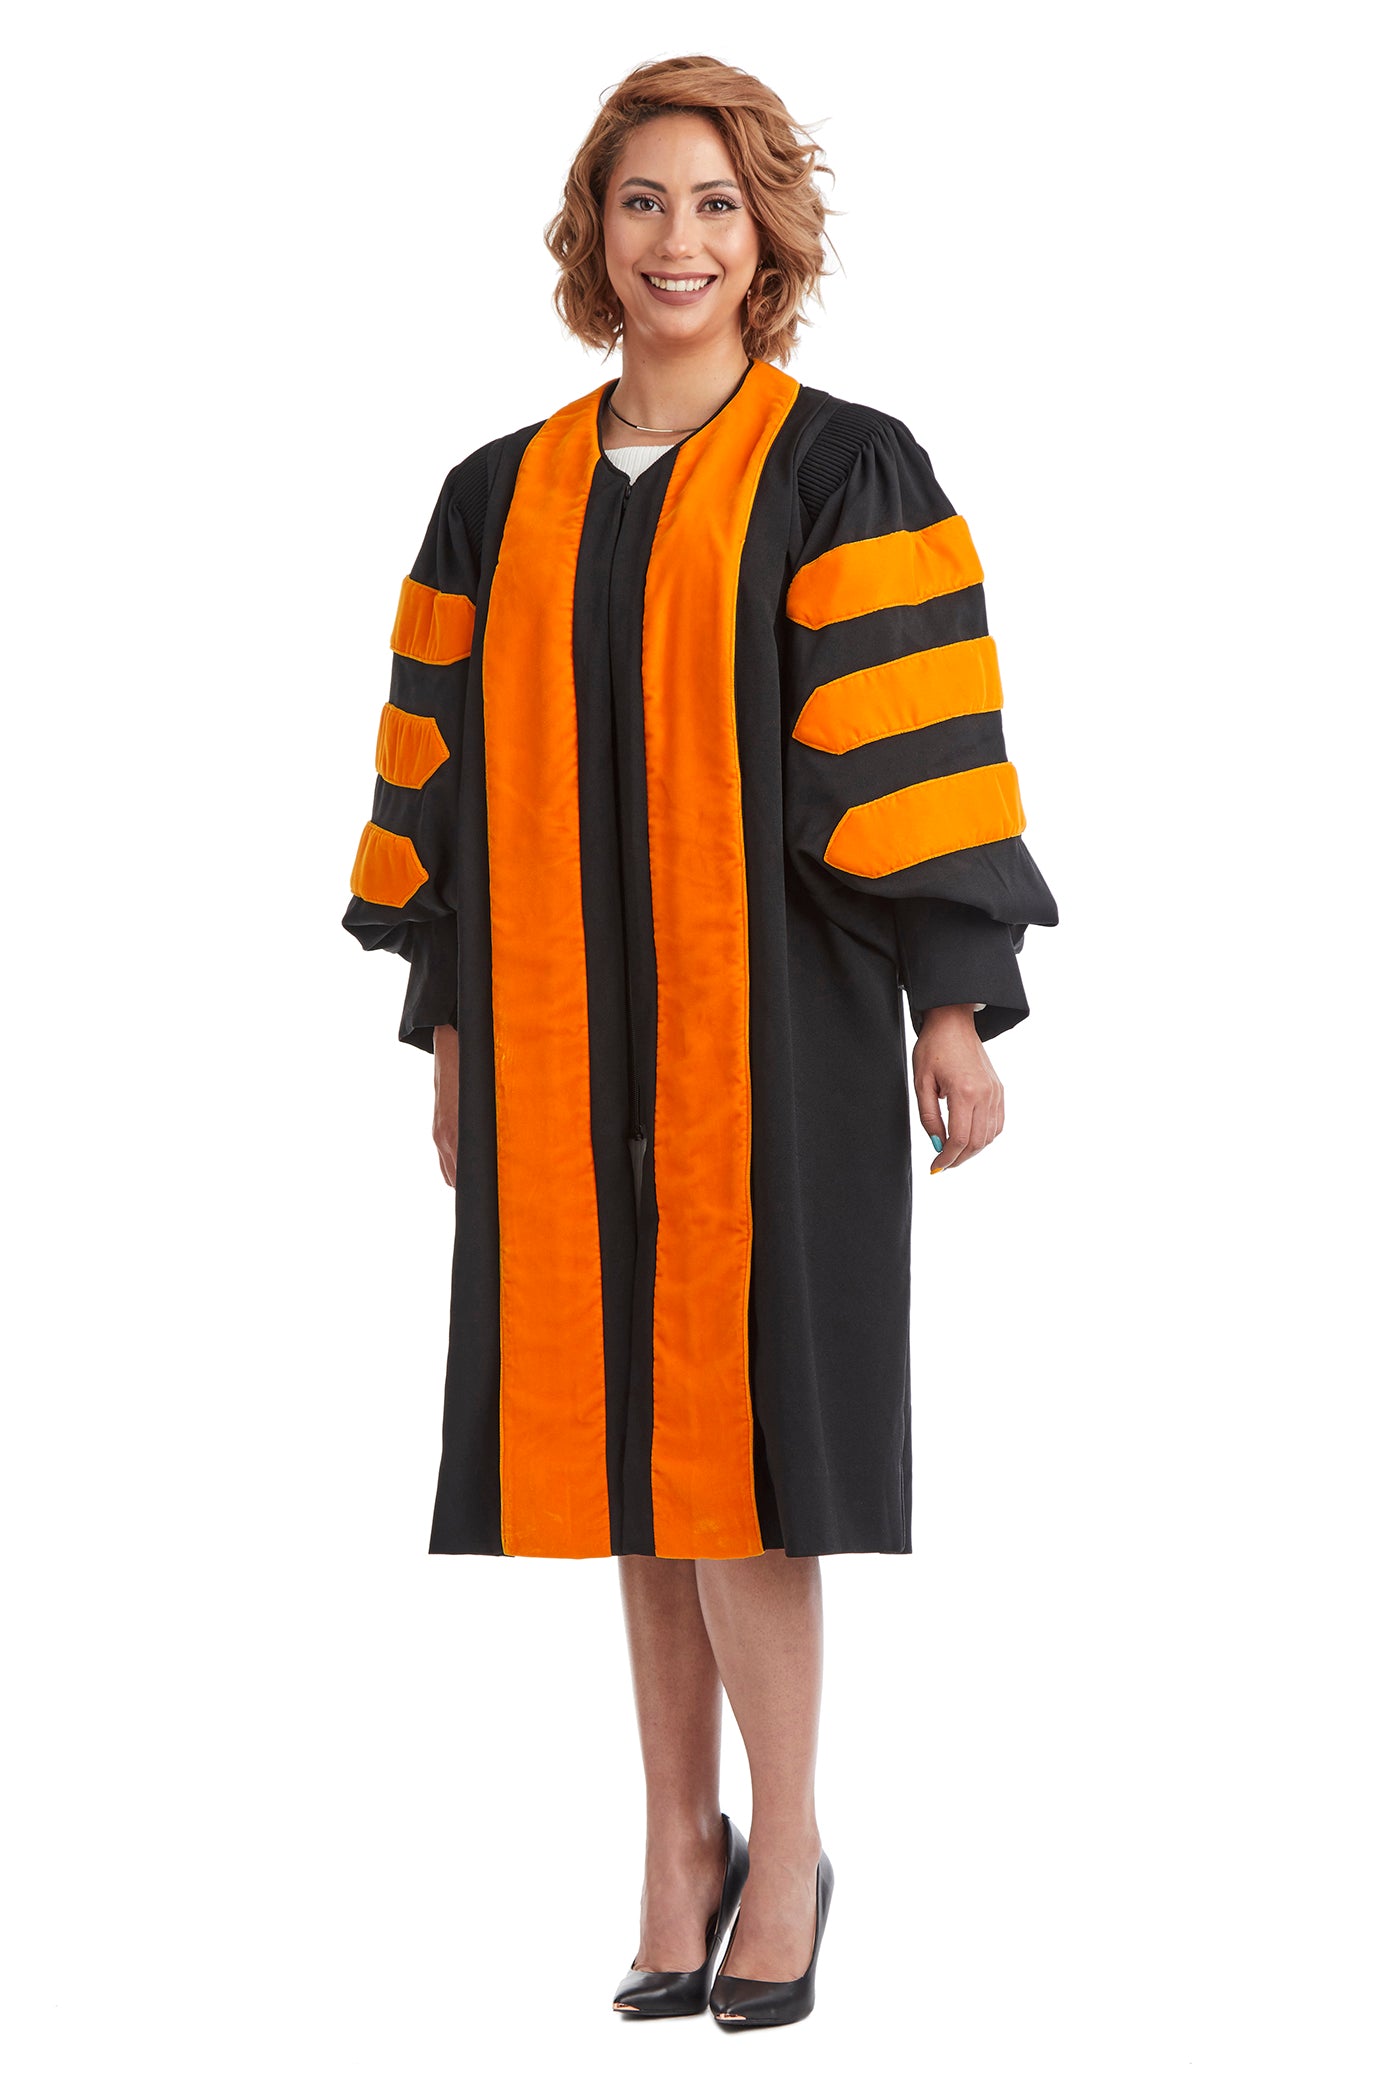 Princeton University Doctoral Graduation Gown